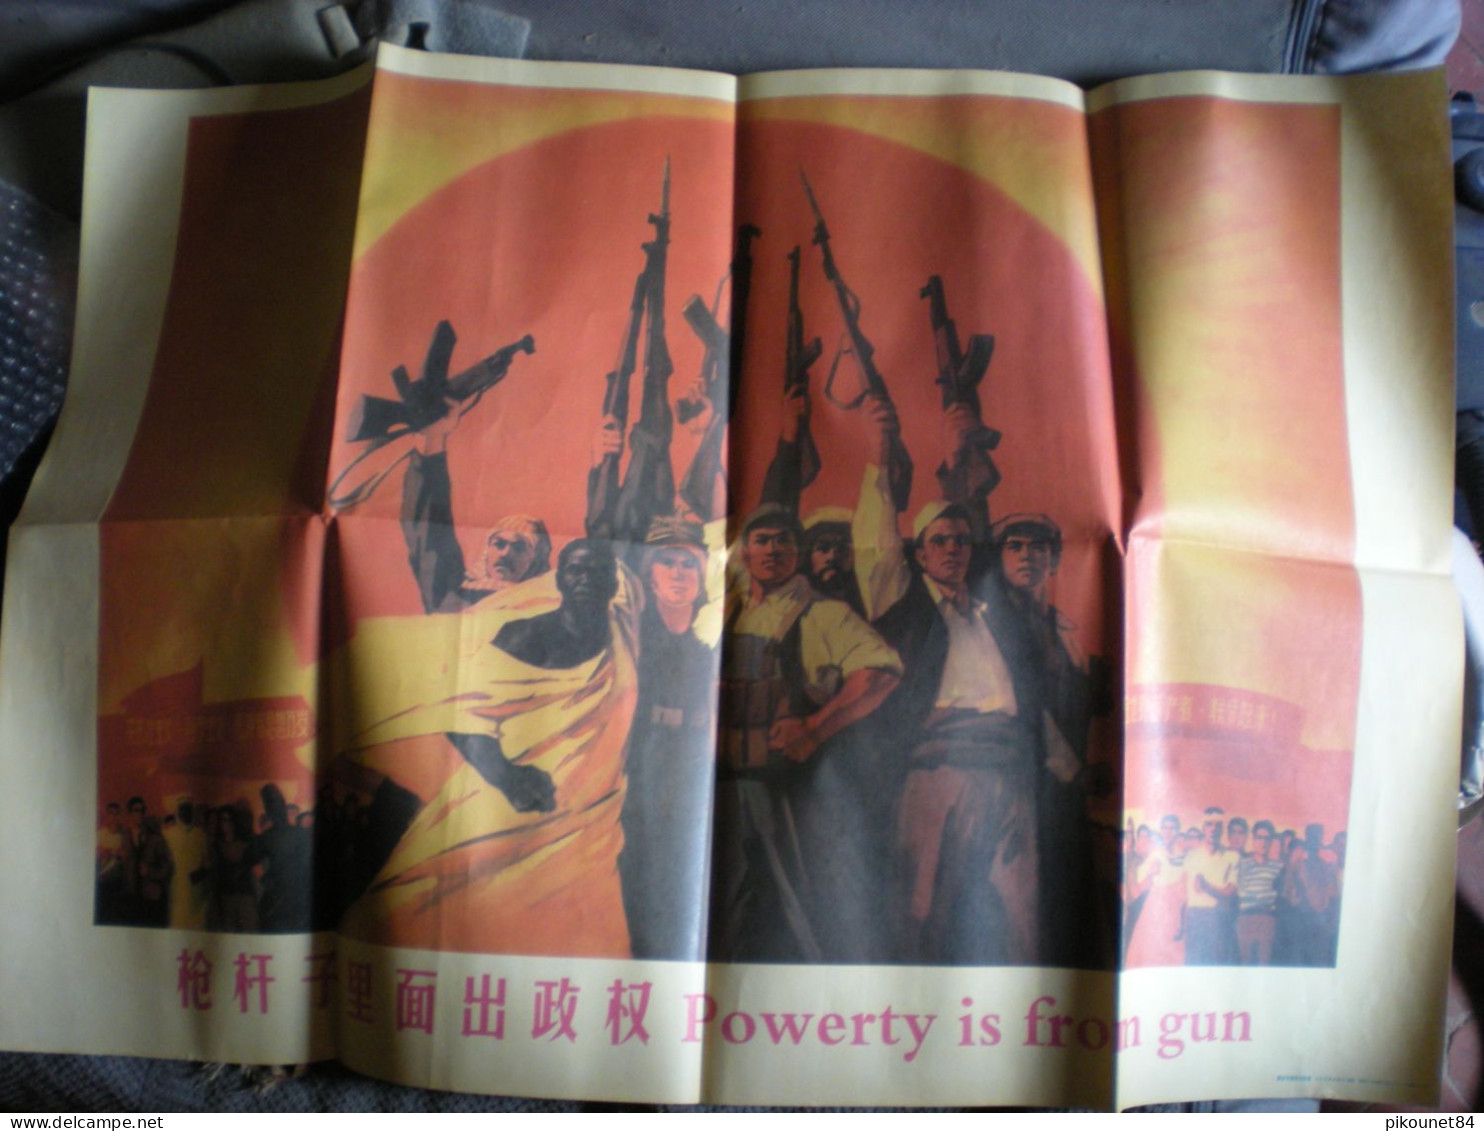 Affiche Originale Propagande Mao Années 60 - Affiches